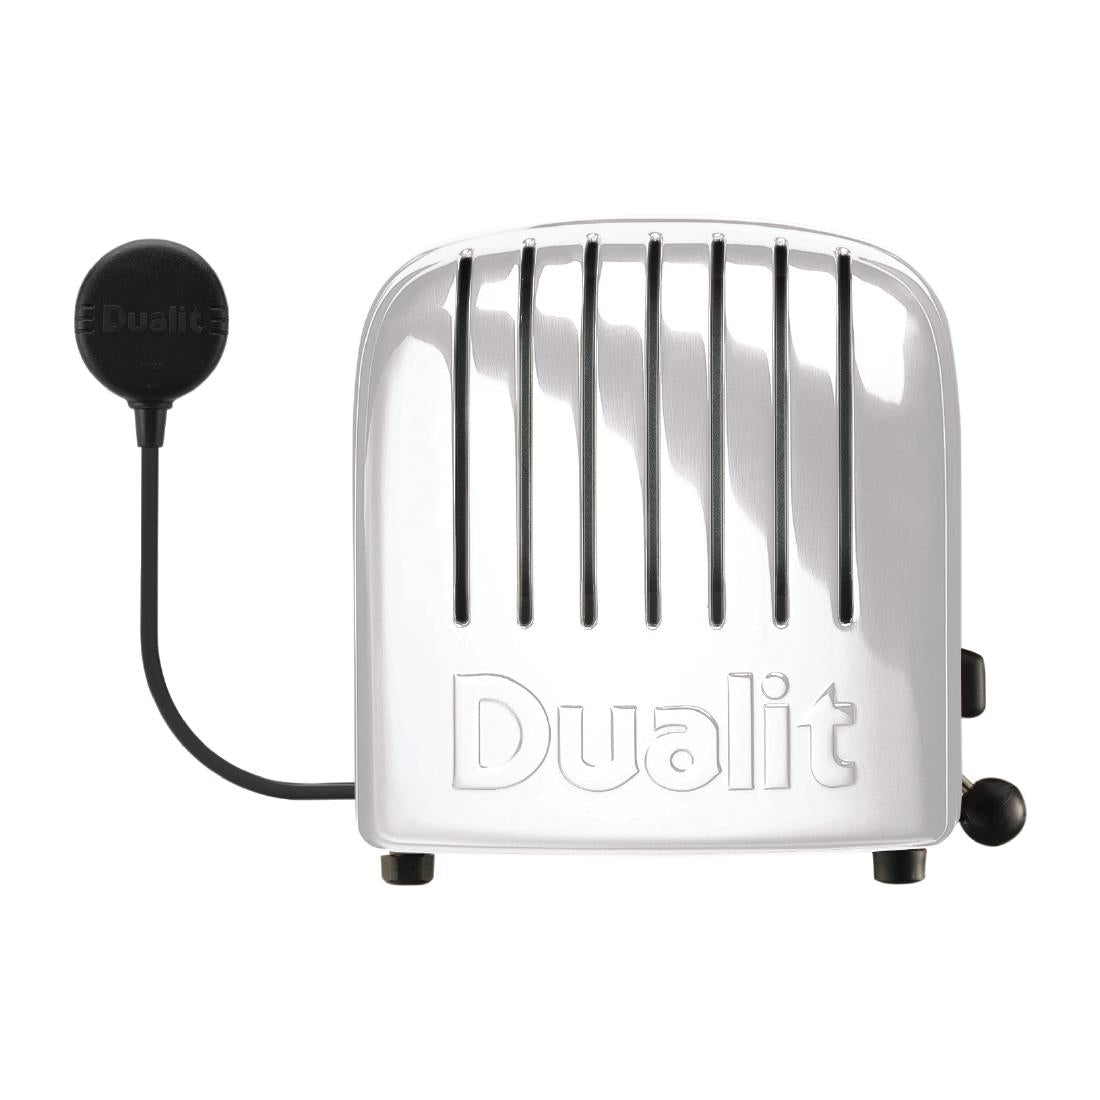 Dualit 3 Slice Vario Toaster White 30087 JD Catering Equipment Solutions Ltd